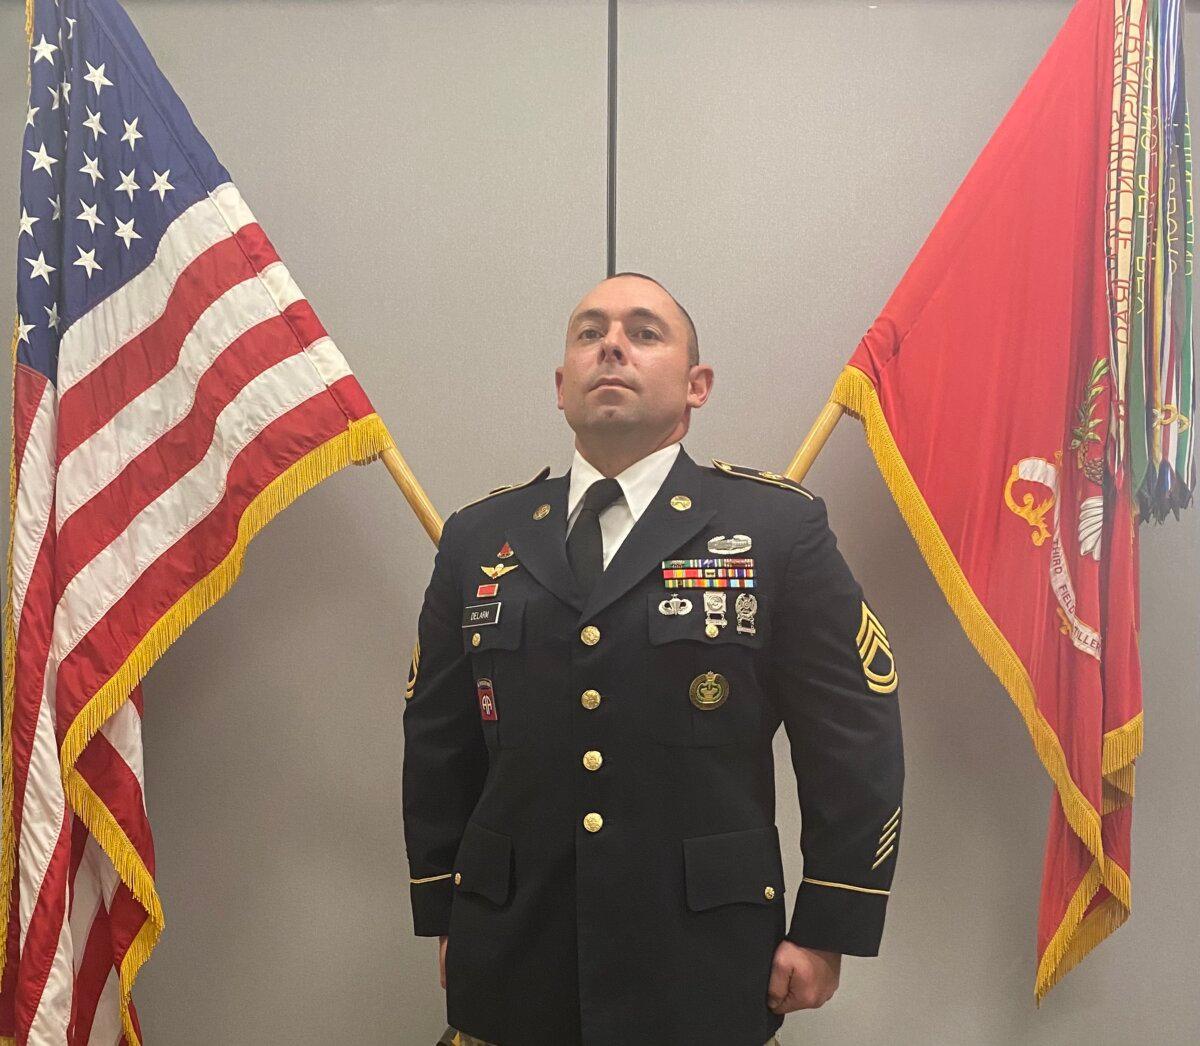 Sgt. 1st Class John Delarm in a photo taken Feb. 23, 2021, for Unit Records at Fort Bliss, Texas. (Courtesy of John Delarm)